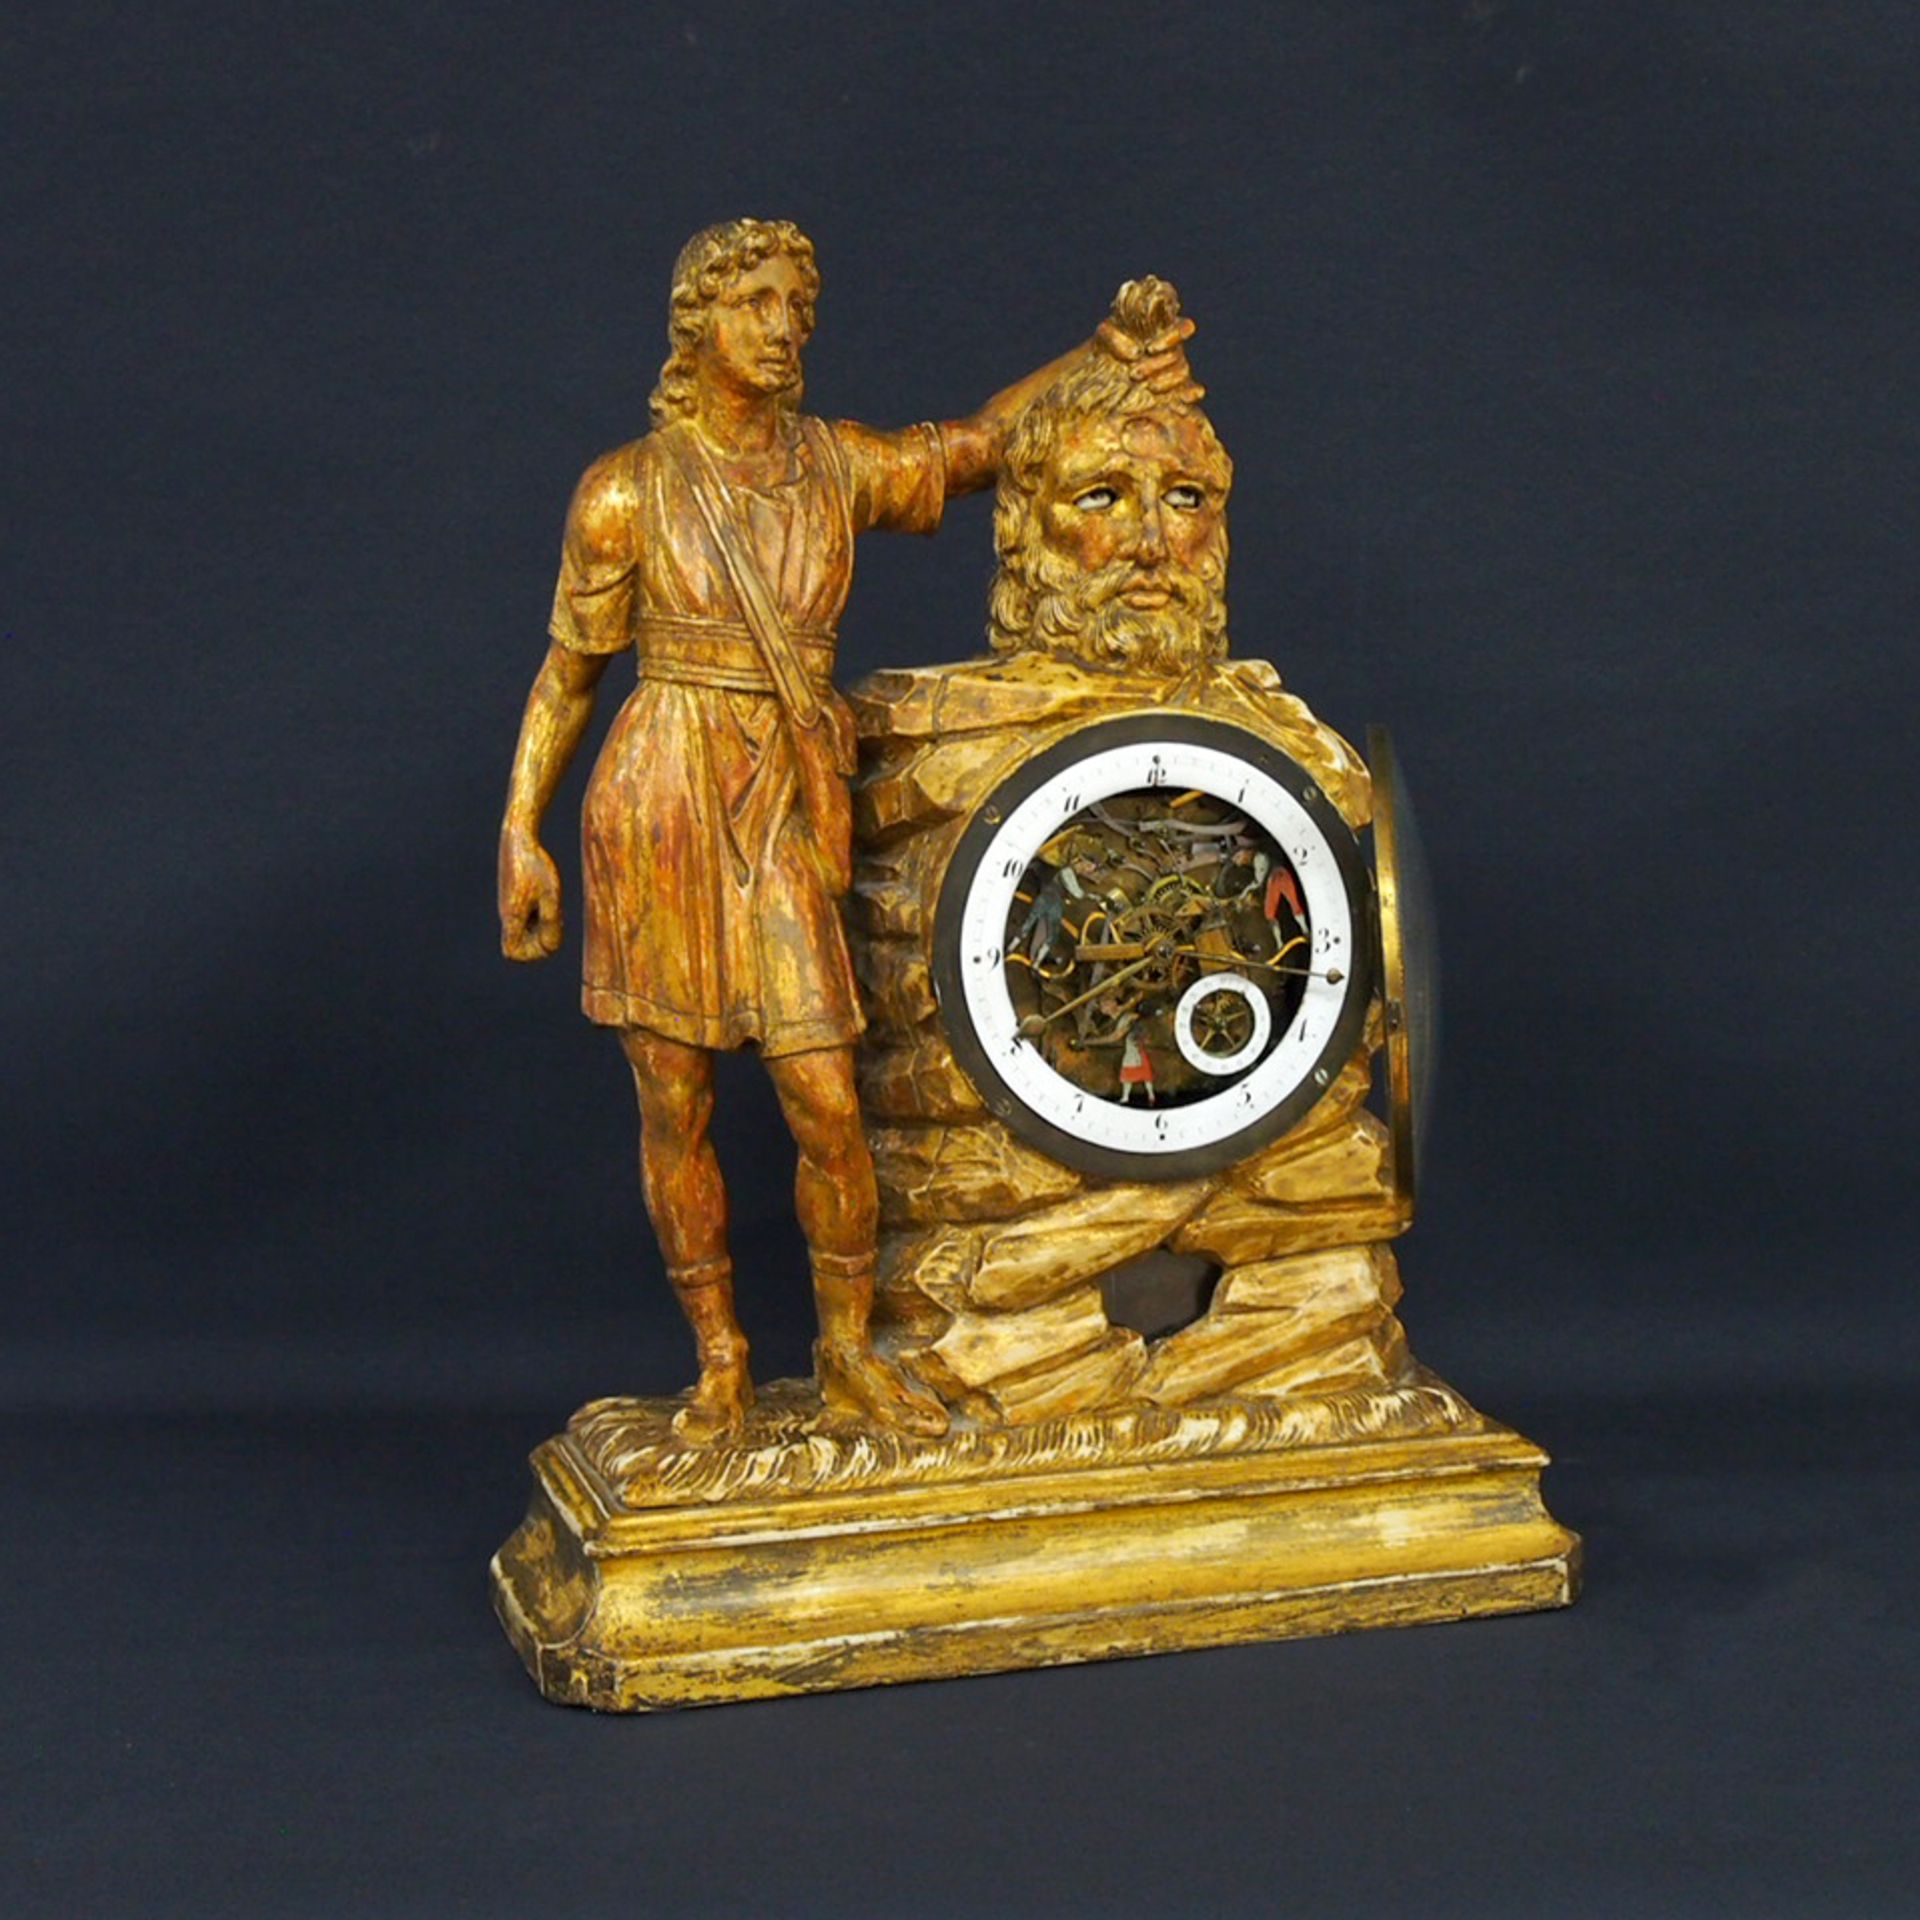 Uhrenautomat David mit dem Haupt des Goliath - Image 2 of 5